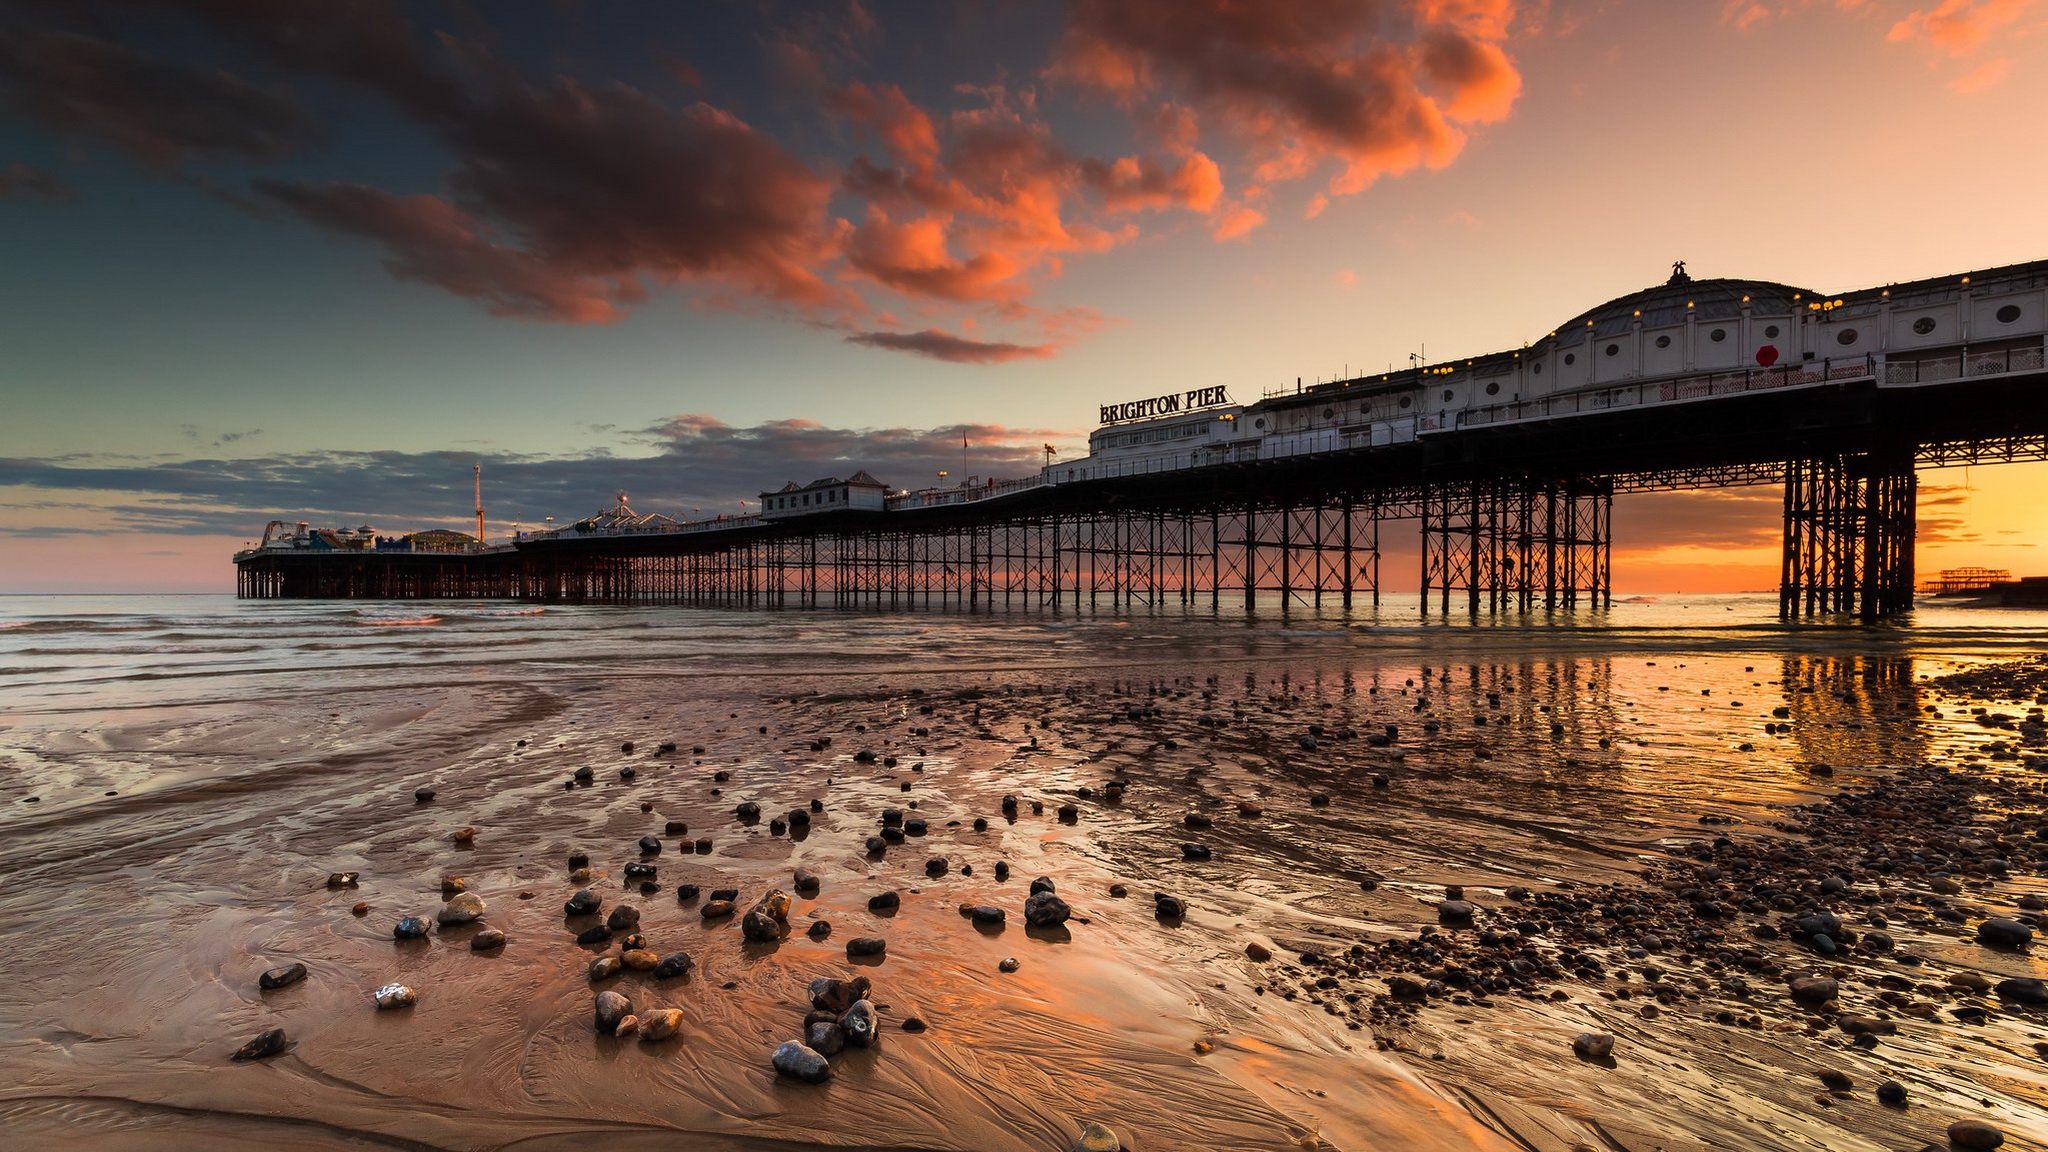 General 2048x1152 England UK Sussex Brighton (England) pier coast sky sunlight outdoors clouds